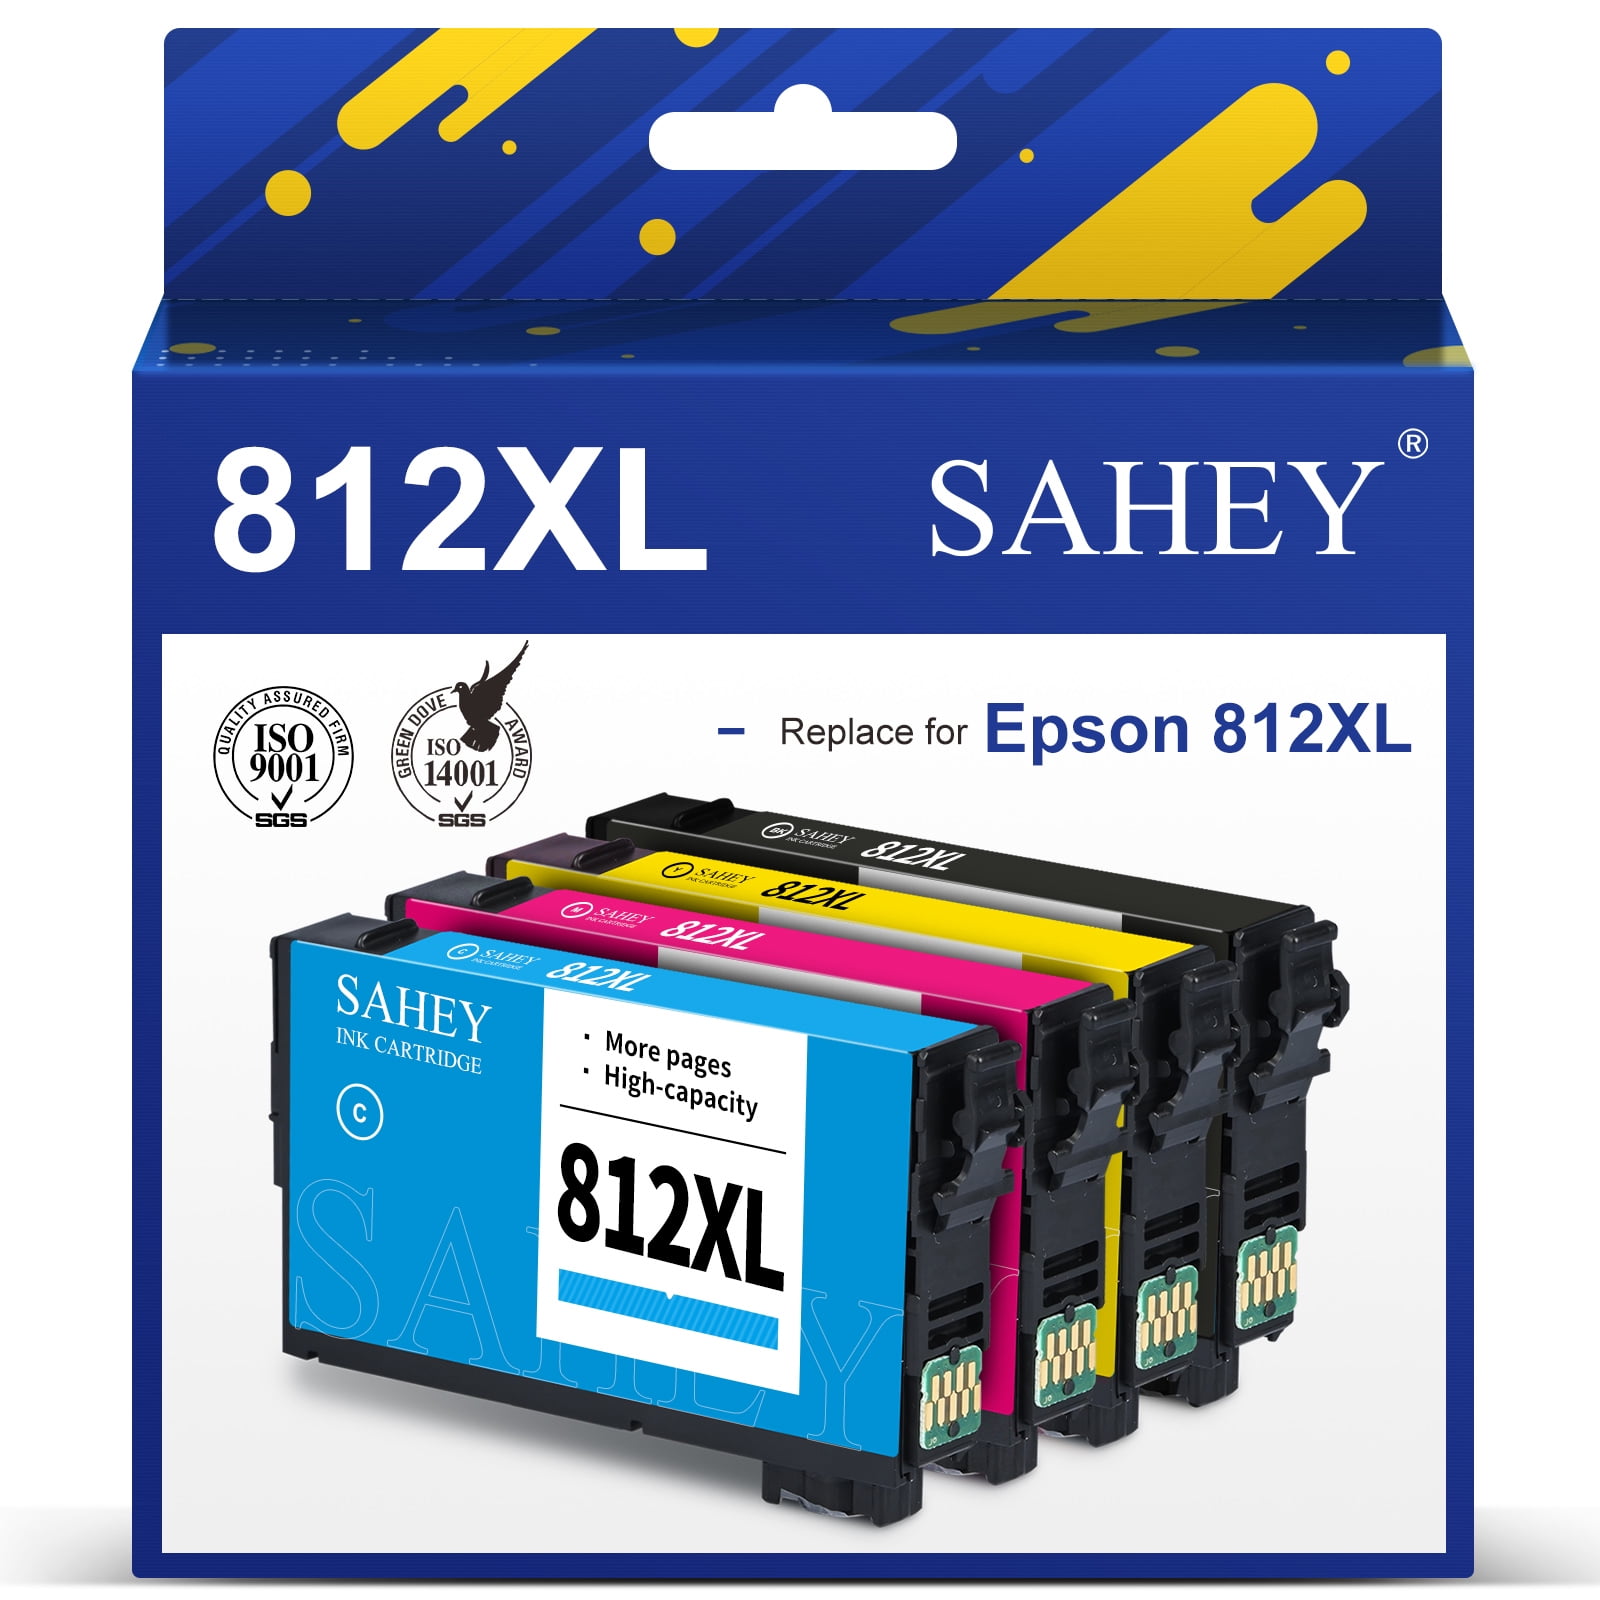 812 XL Ink Cartridge for Epson Ink Cartridge with Epson 812XL Printer Ink for Pro WF-7820 WF-7840 WF-7310 Workforce EC-C7000 (Black, Cyan, Magenta, Yellow, 4 Pack) - Walmart.com